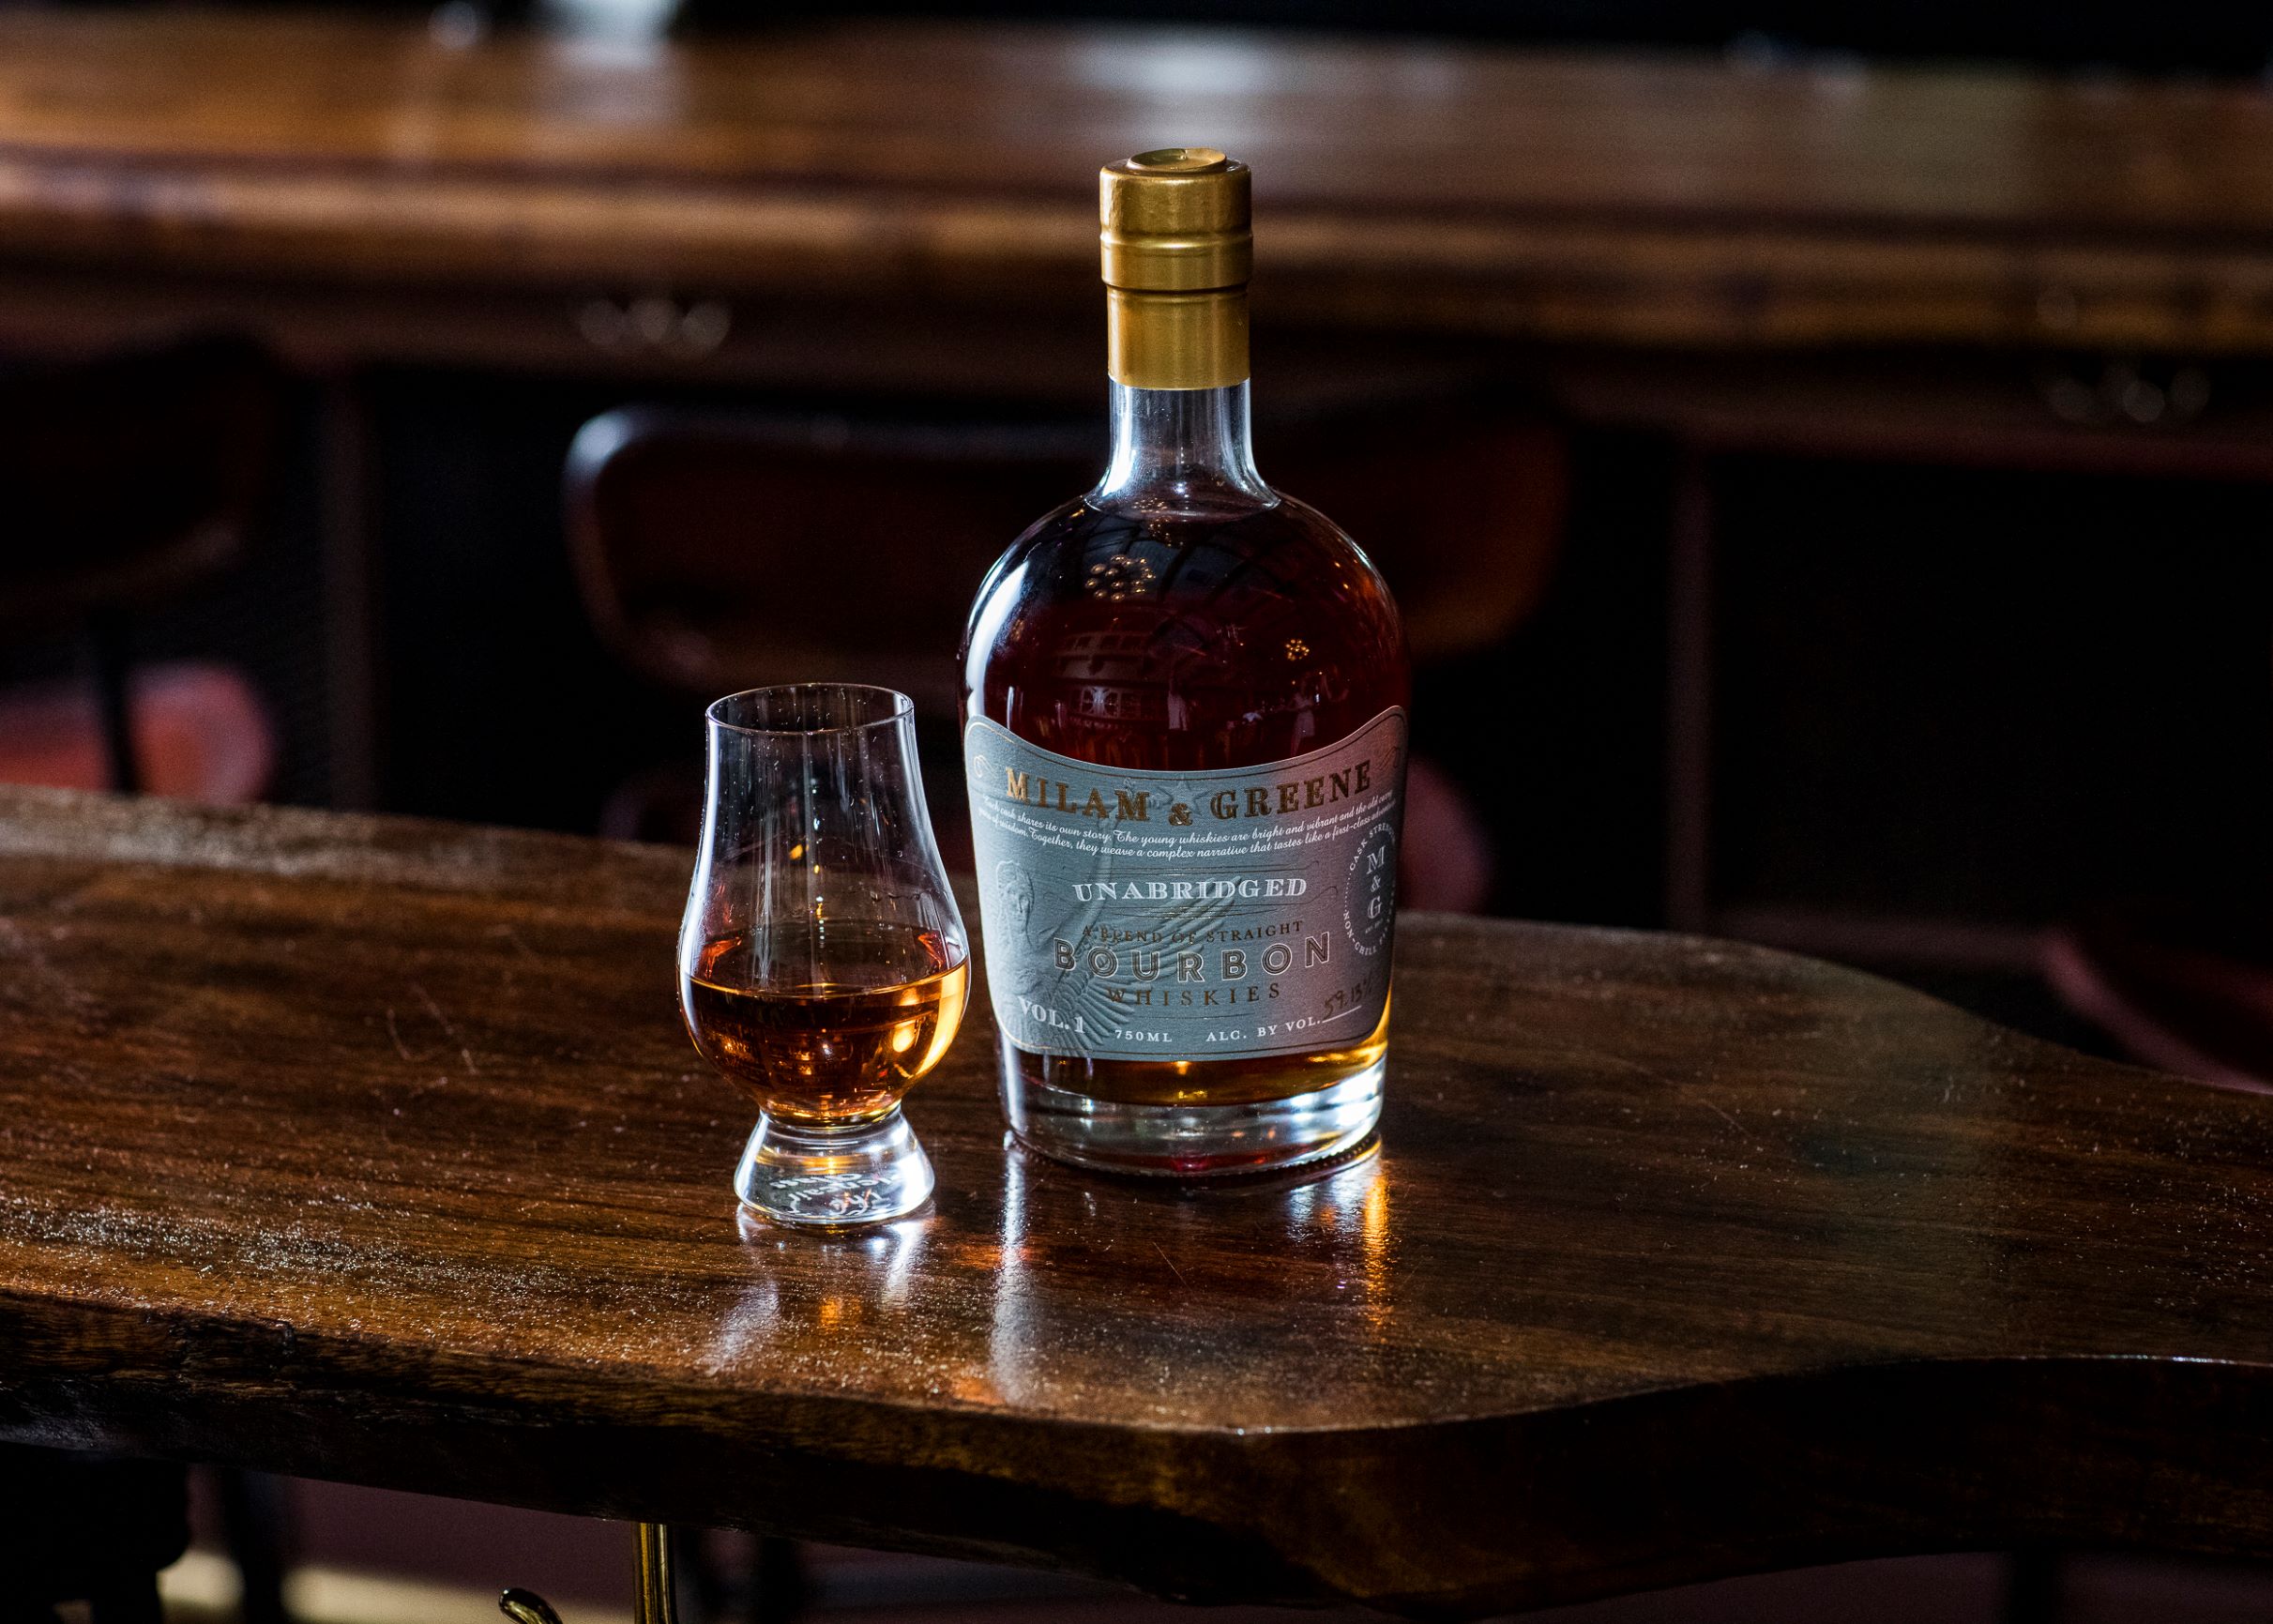 Milam & Greene Unabridged Volume 1 a blend of straight bourbon whiskies